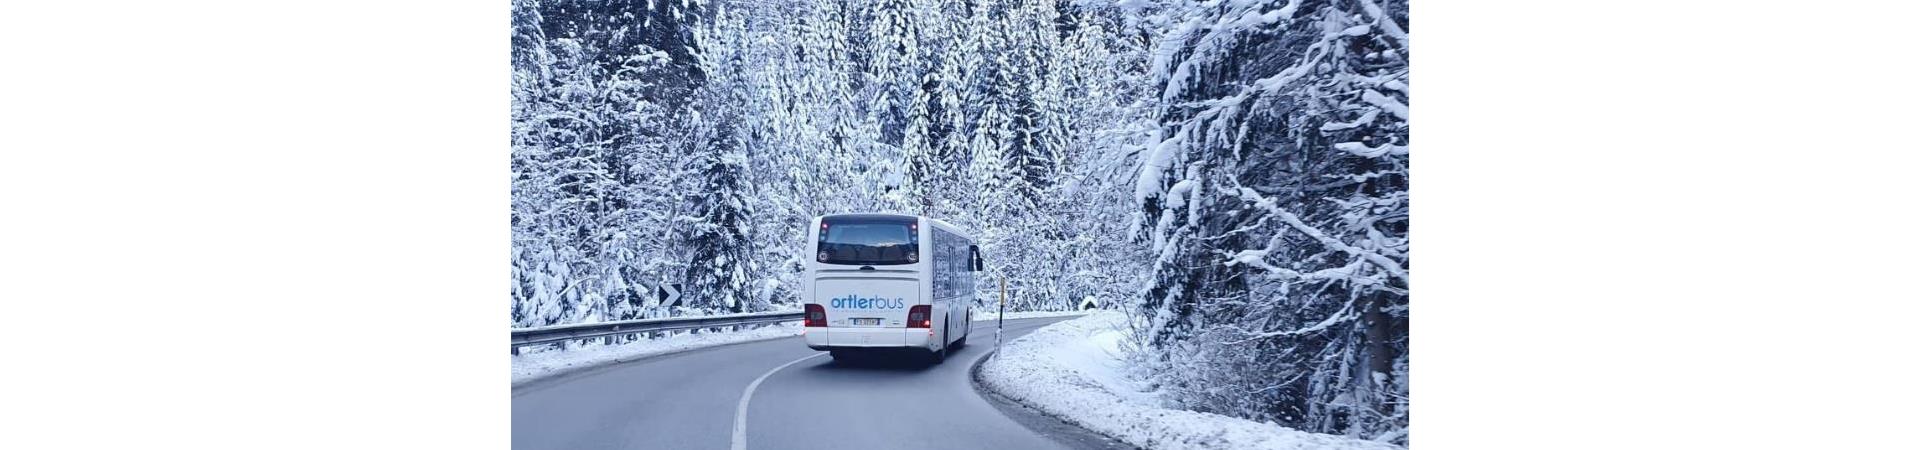 ortler-bus-winter